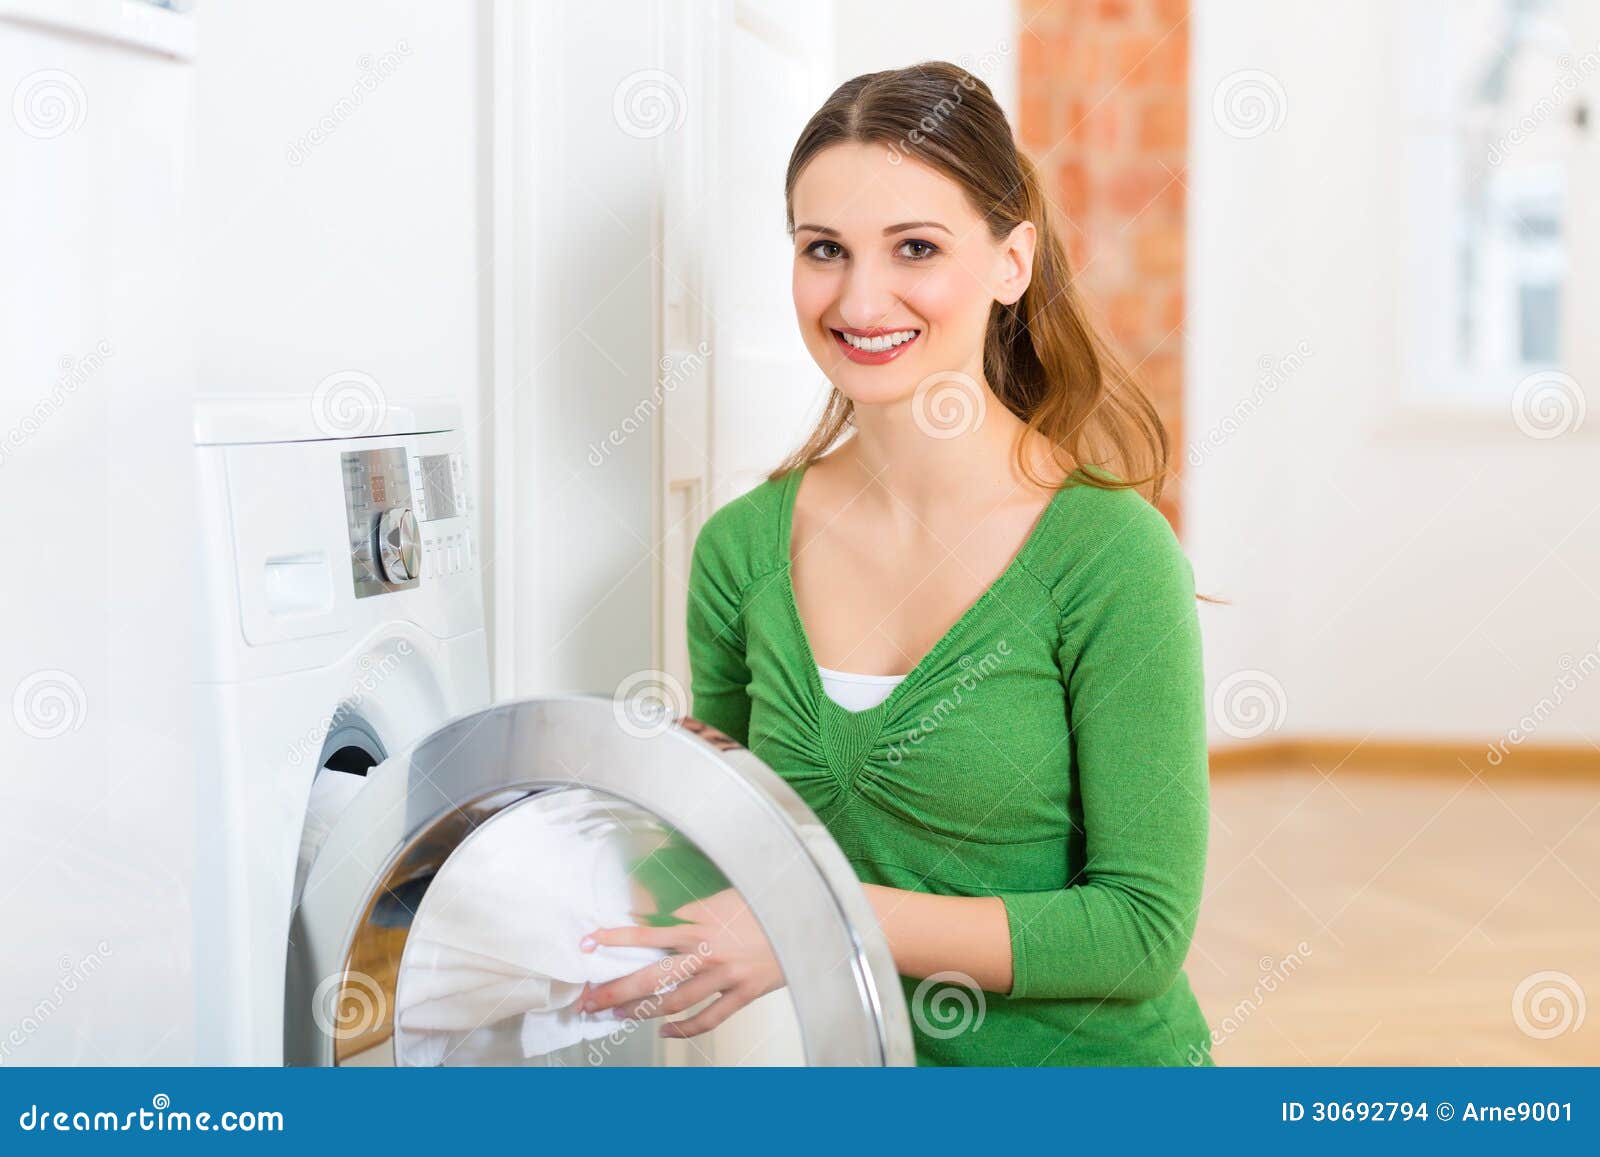 Premium Photo  Closeup of housekeeper holding modern washing